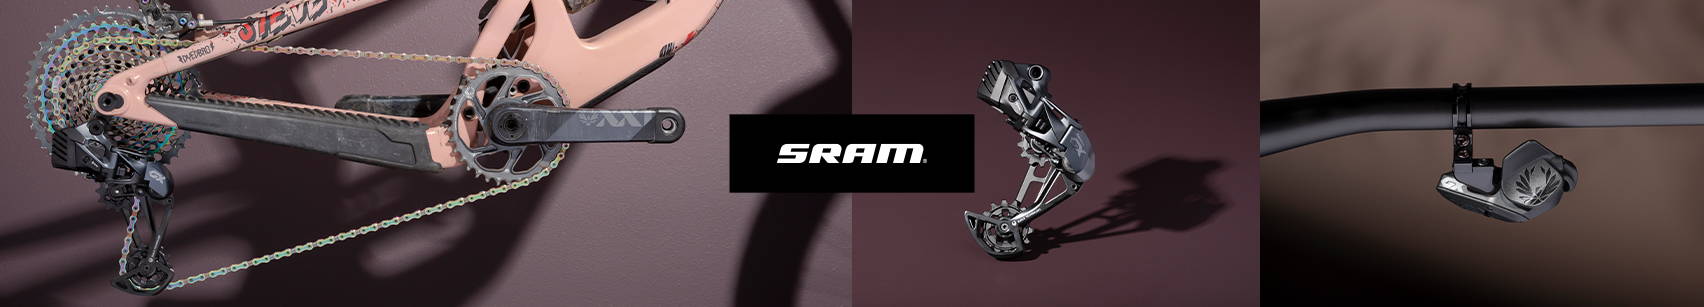 SRAM hero banner GX AXS Drivetrain components rear derailleur controller on a purple background